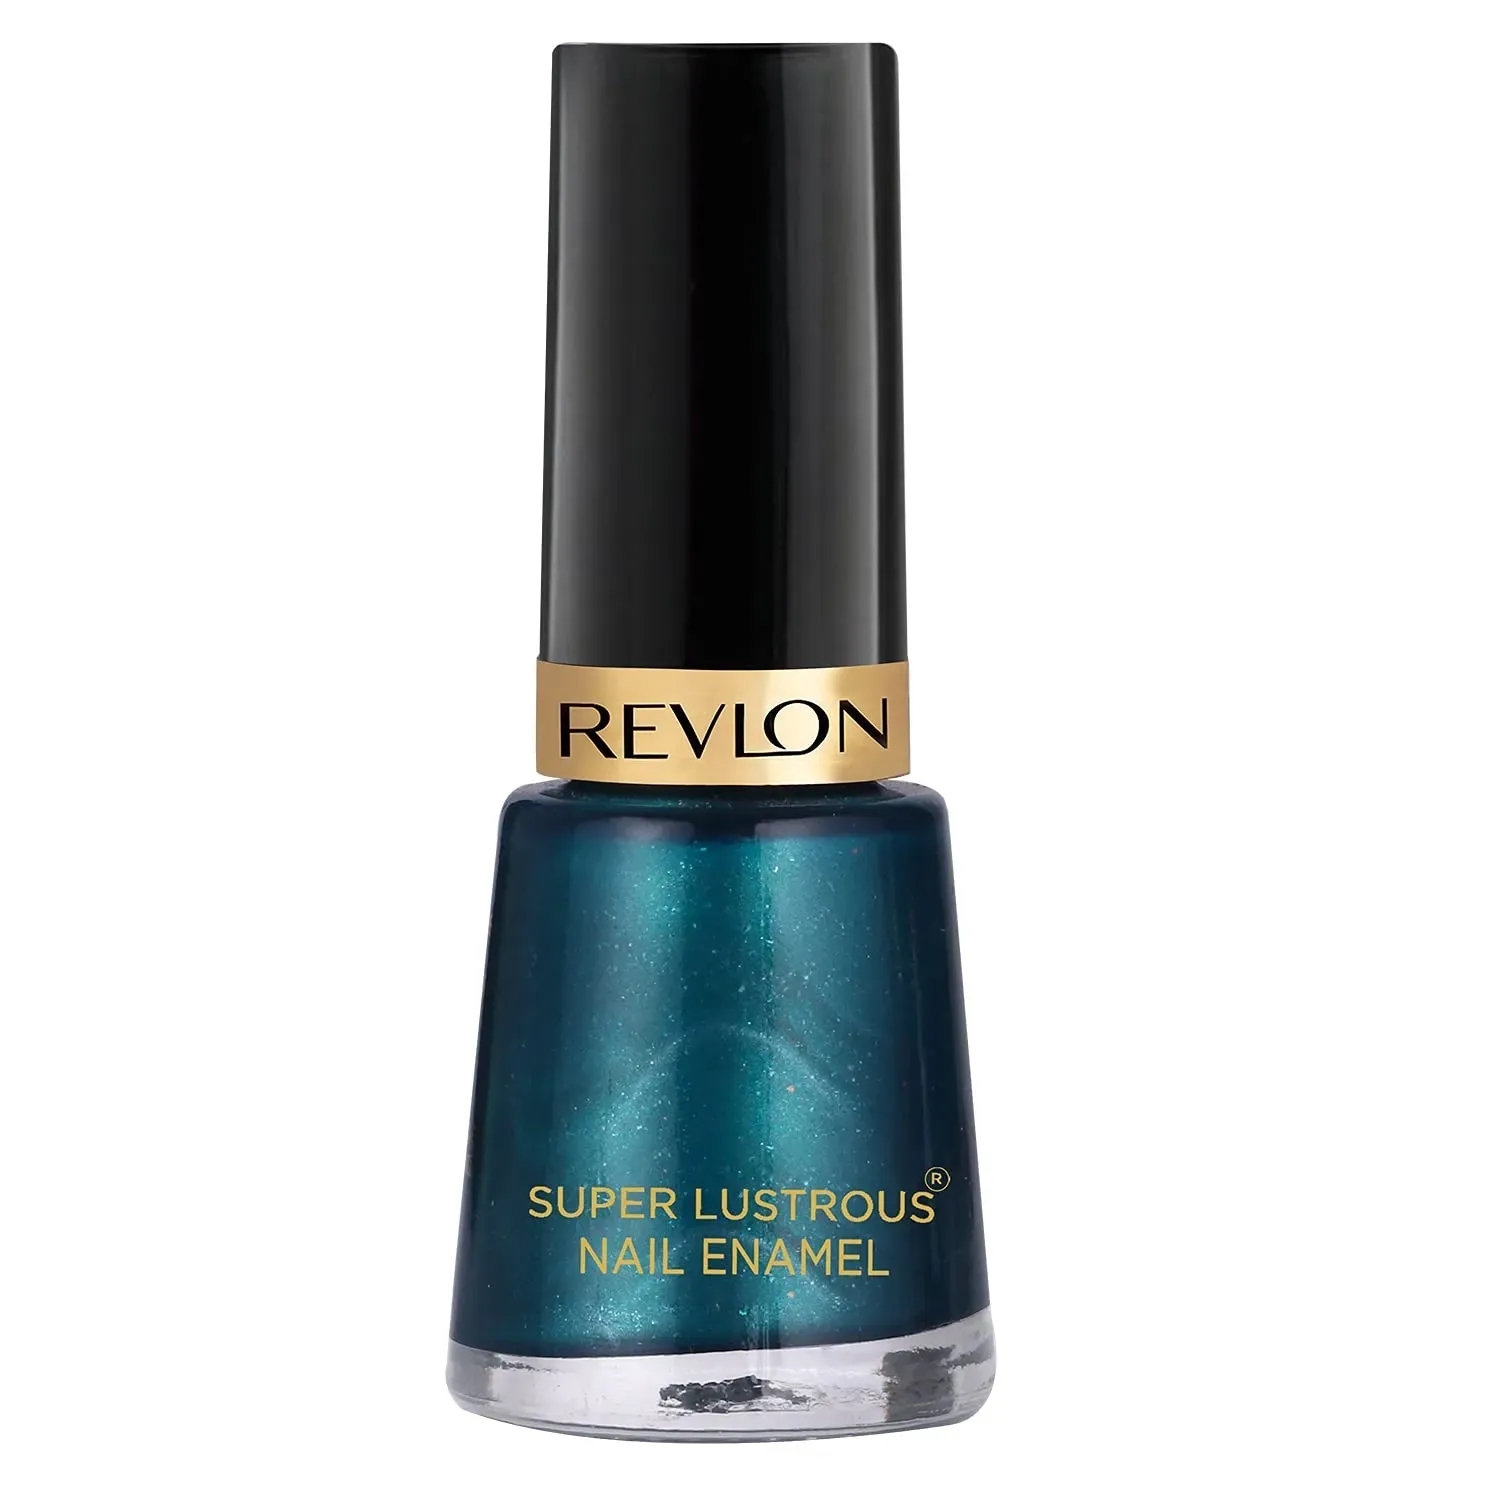 Revlon | Revlon Super Lustrous Nail Enamel - Peacock Blue (8ml)